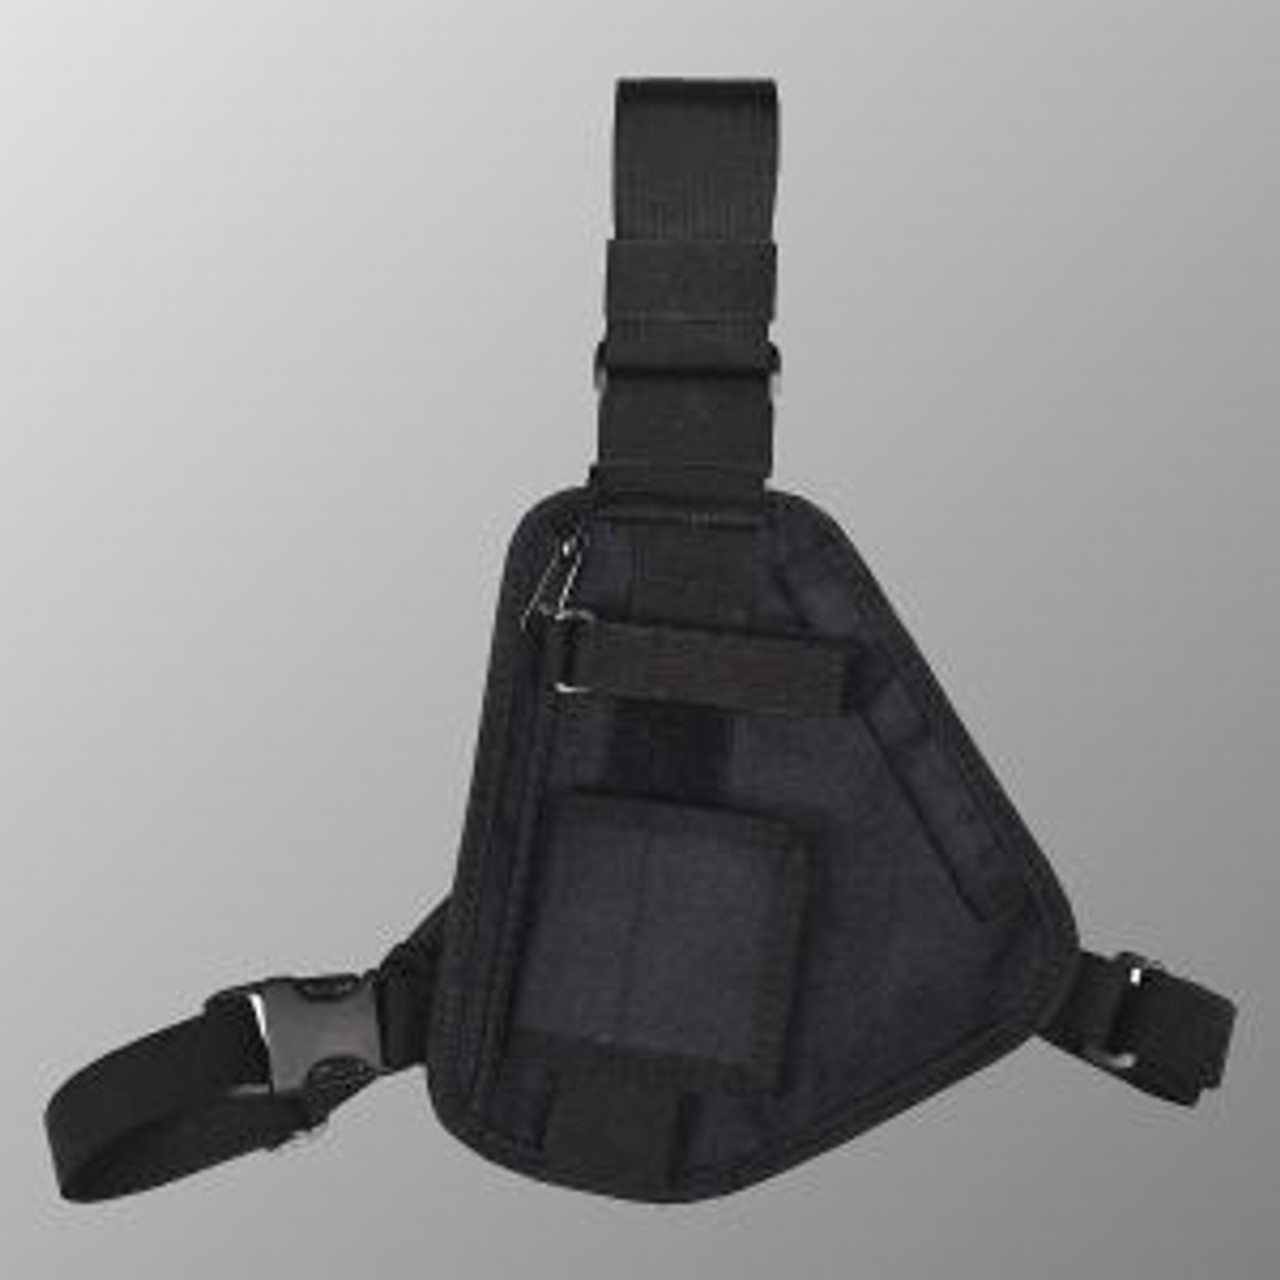 Relm / BK DPHX5102X 3-Point Chest Harness - Black